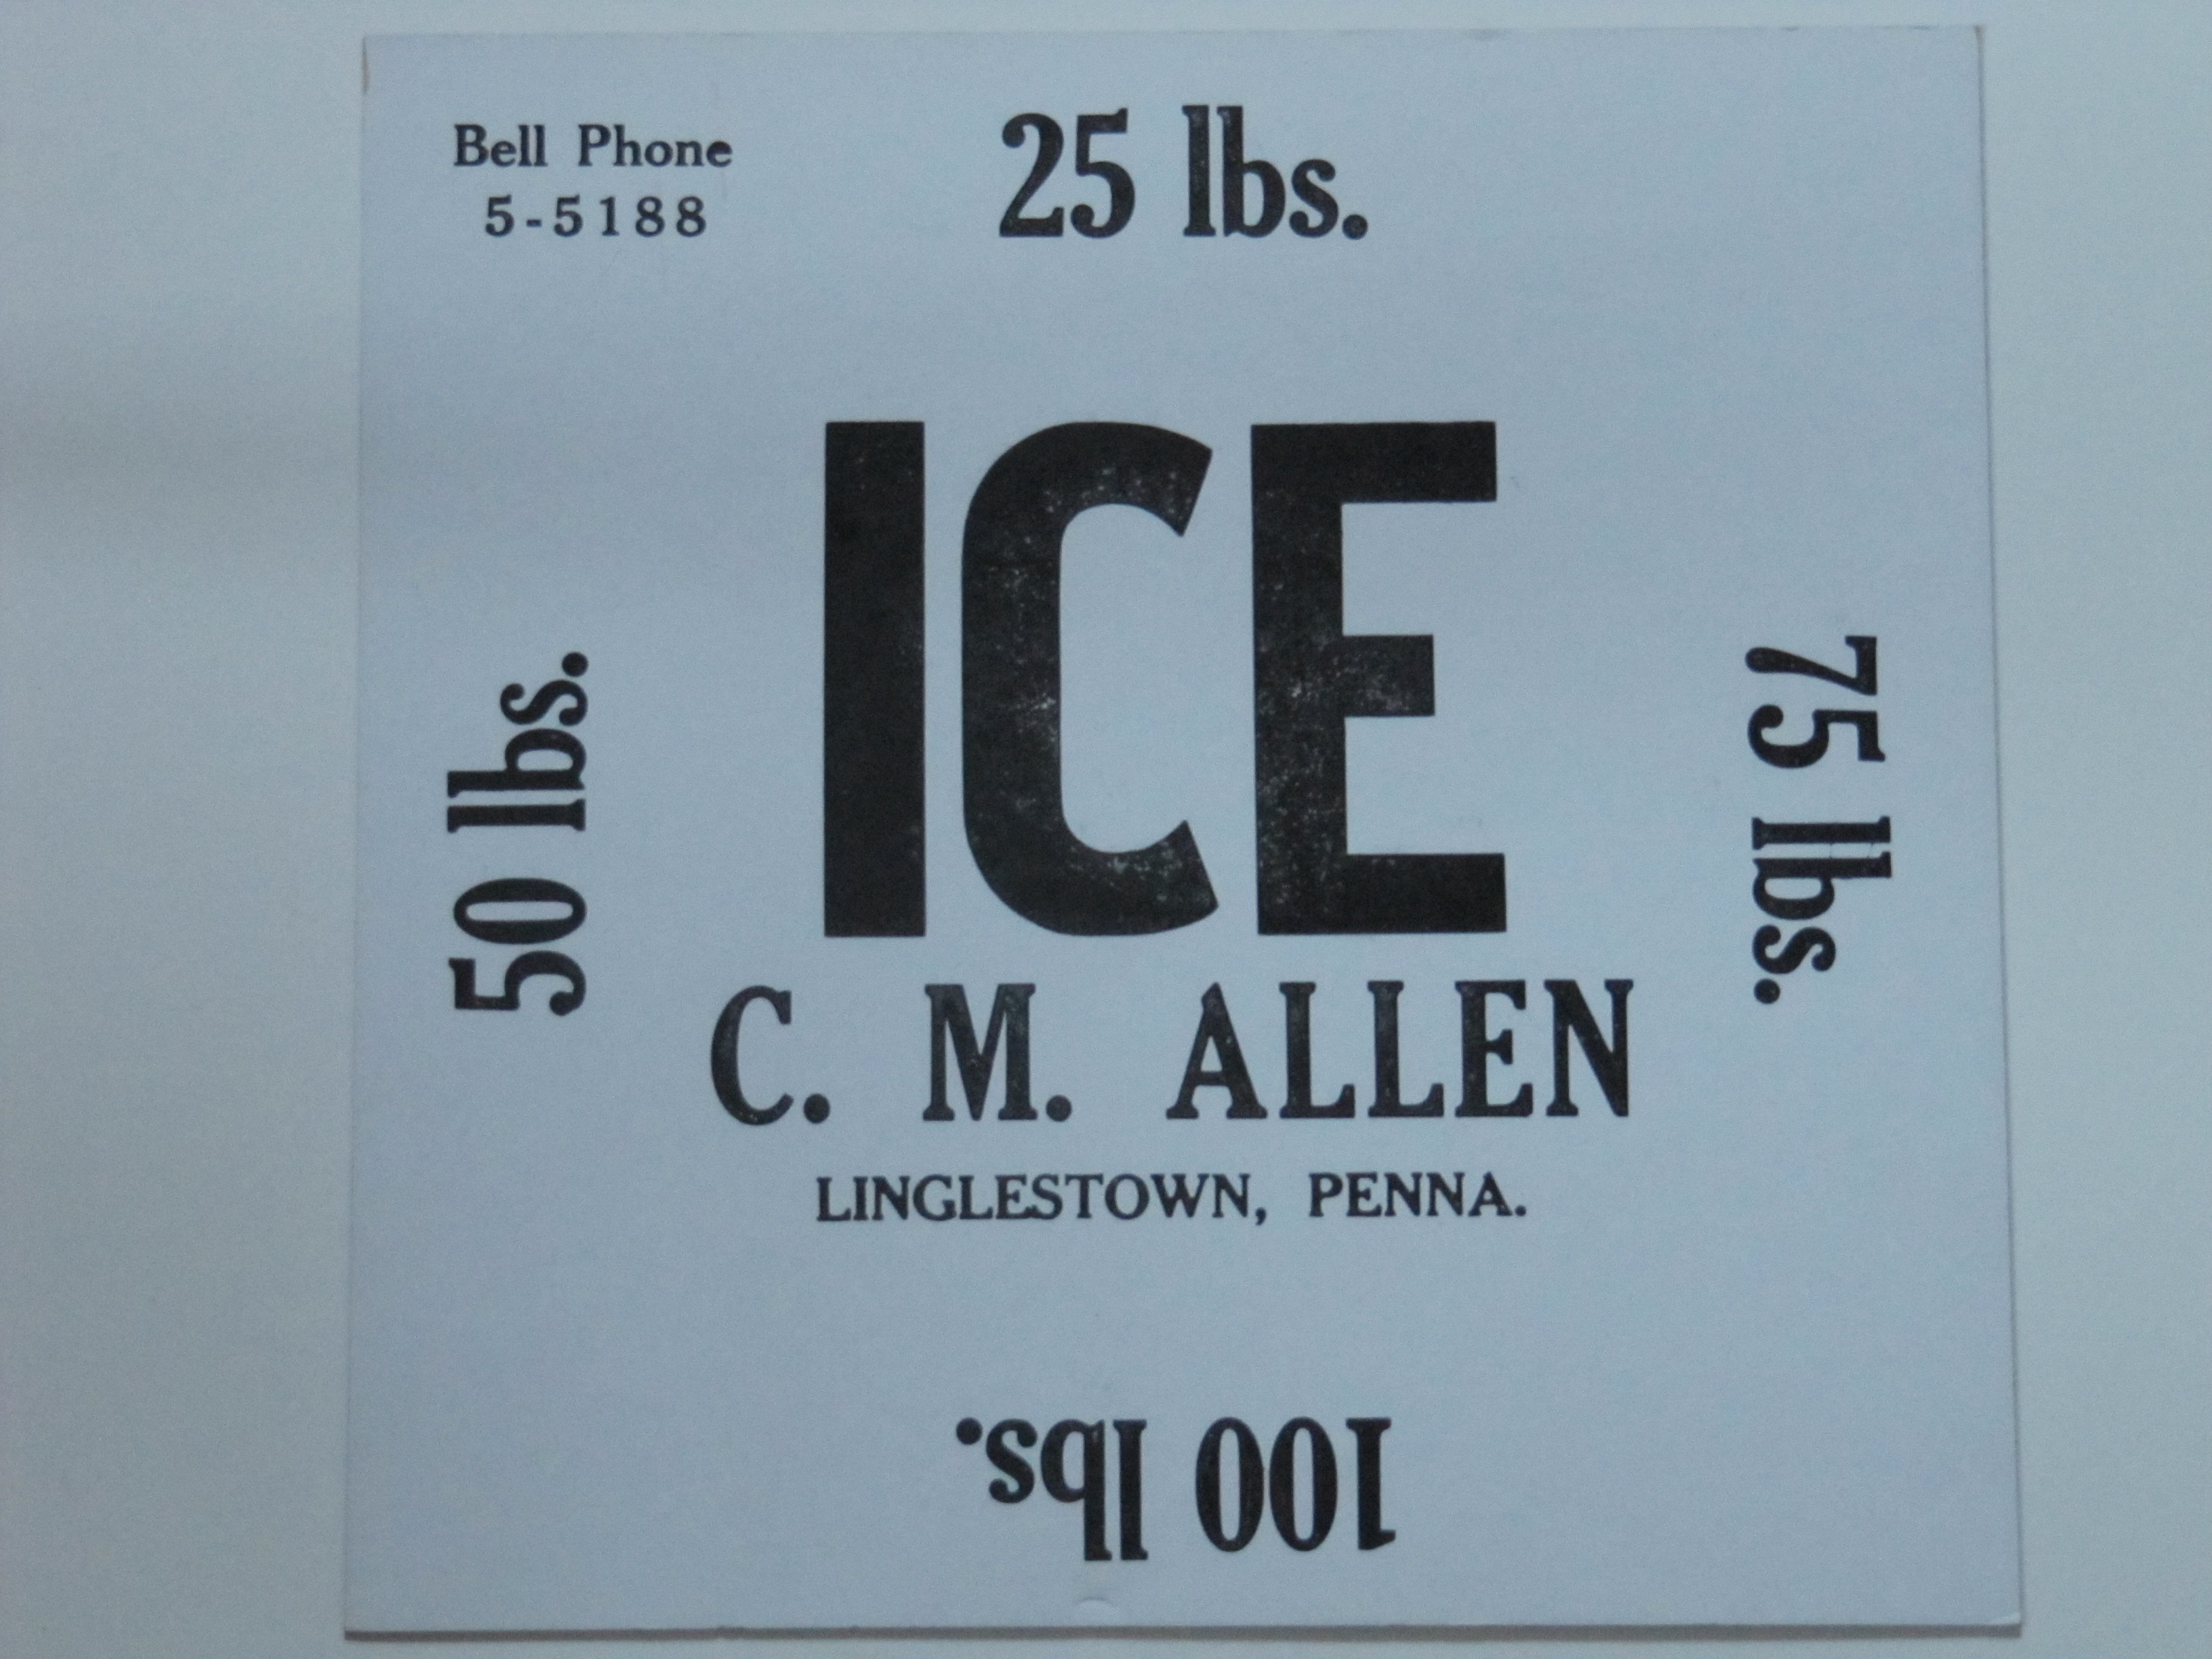 C.M.Allen Ice